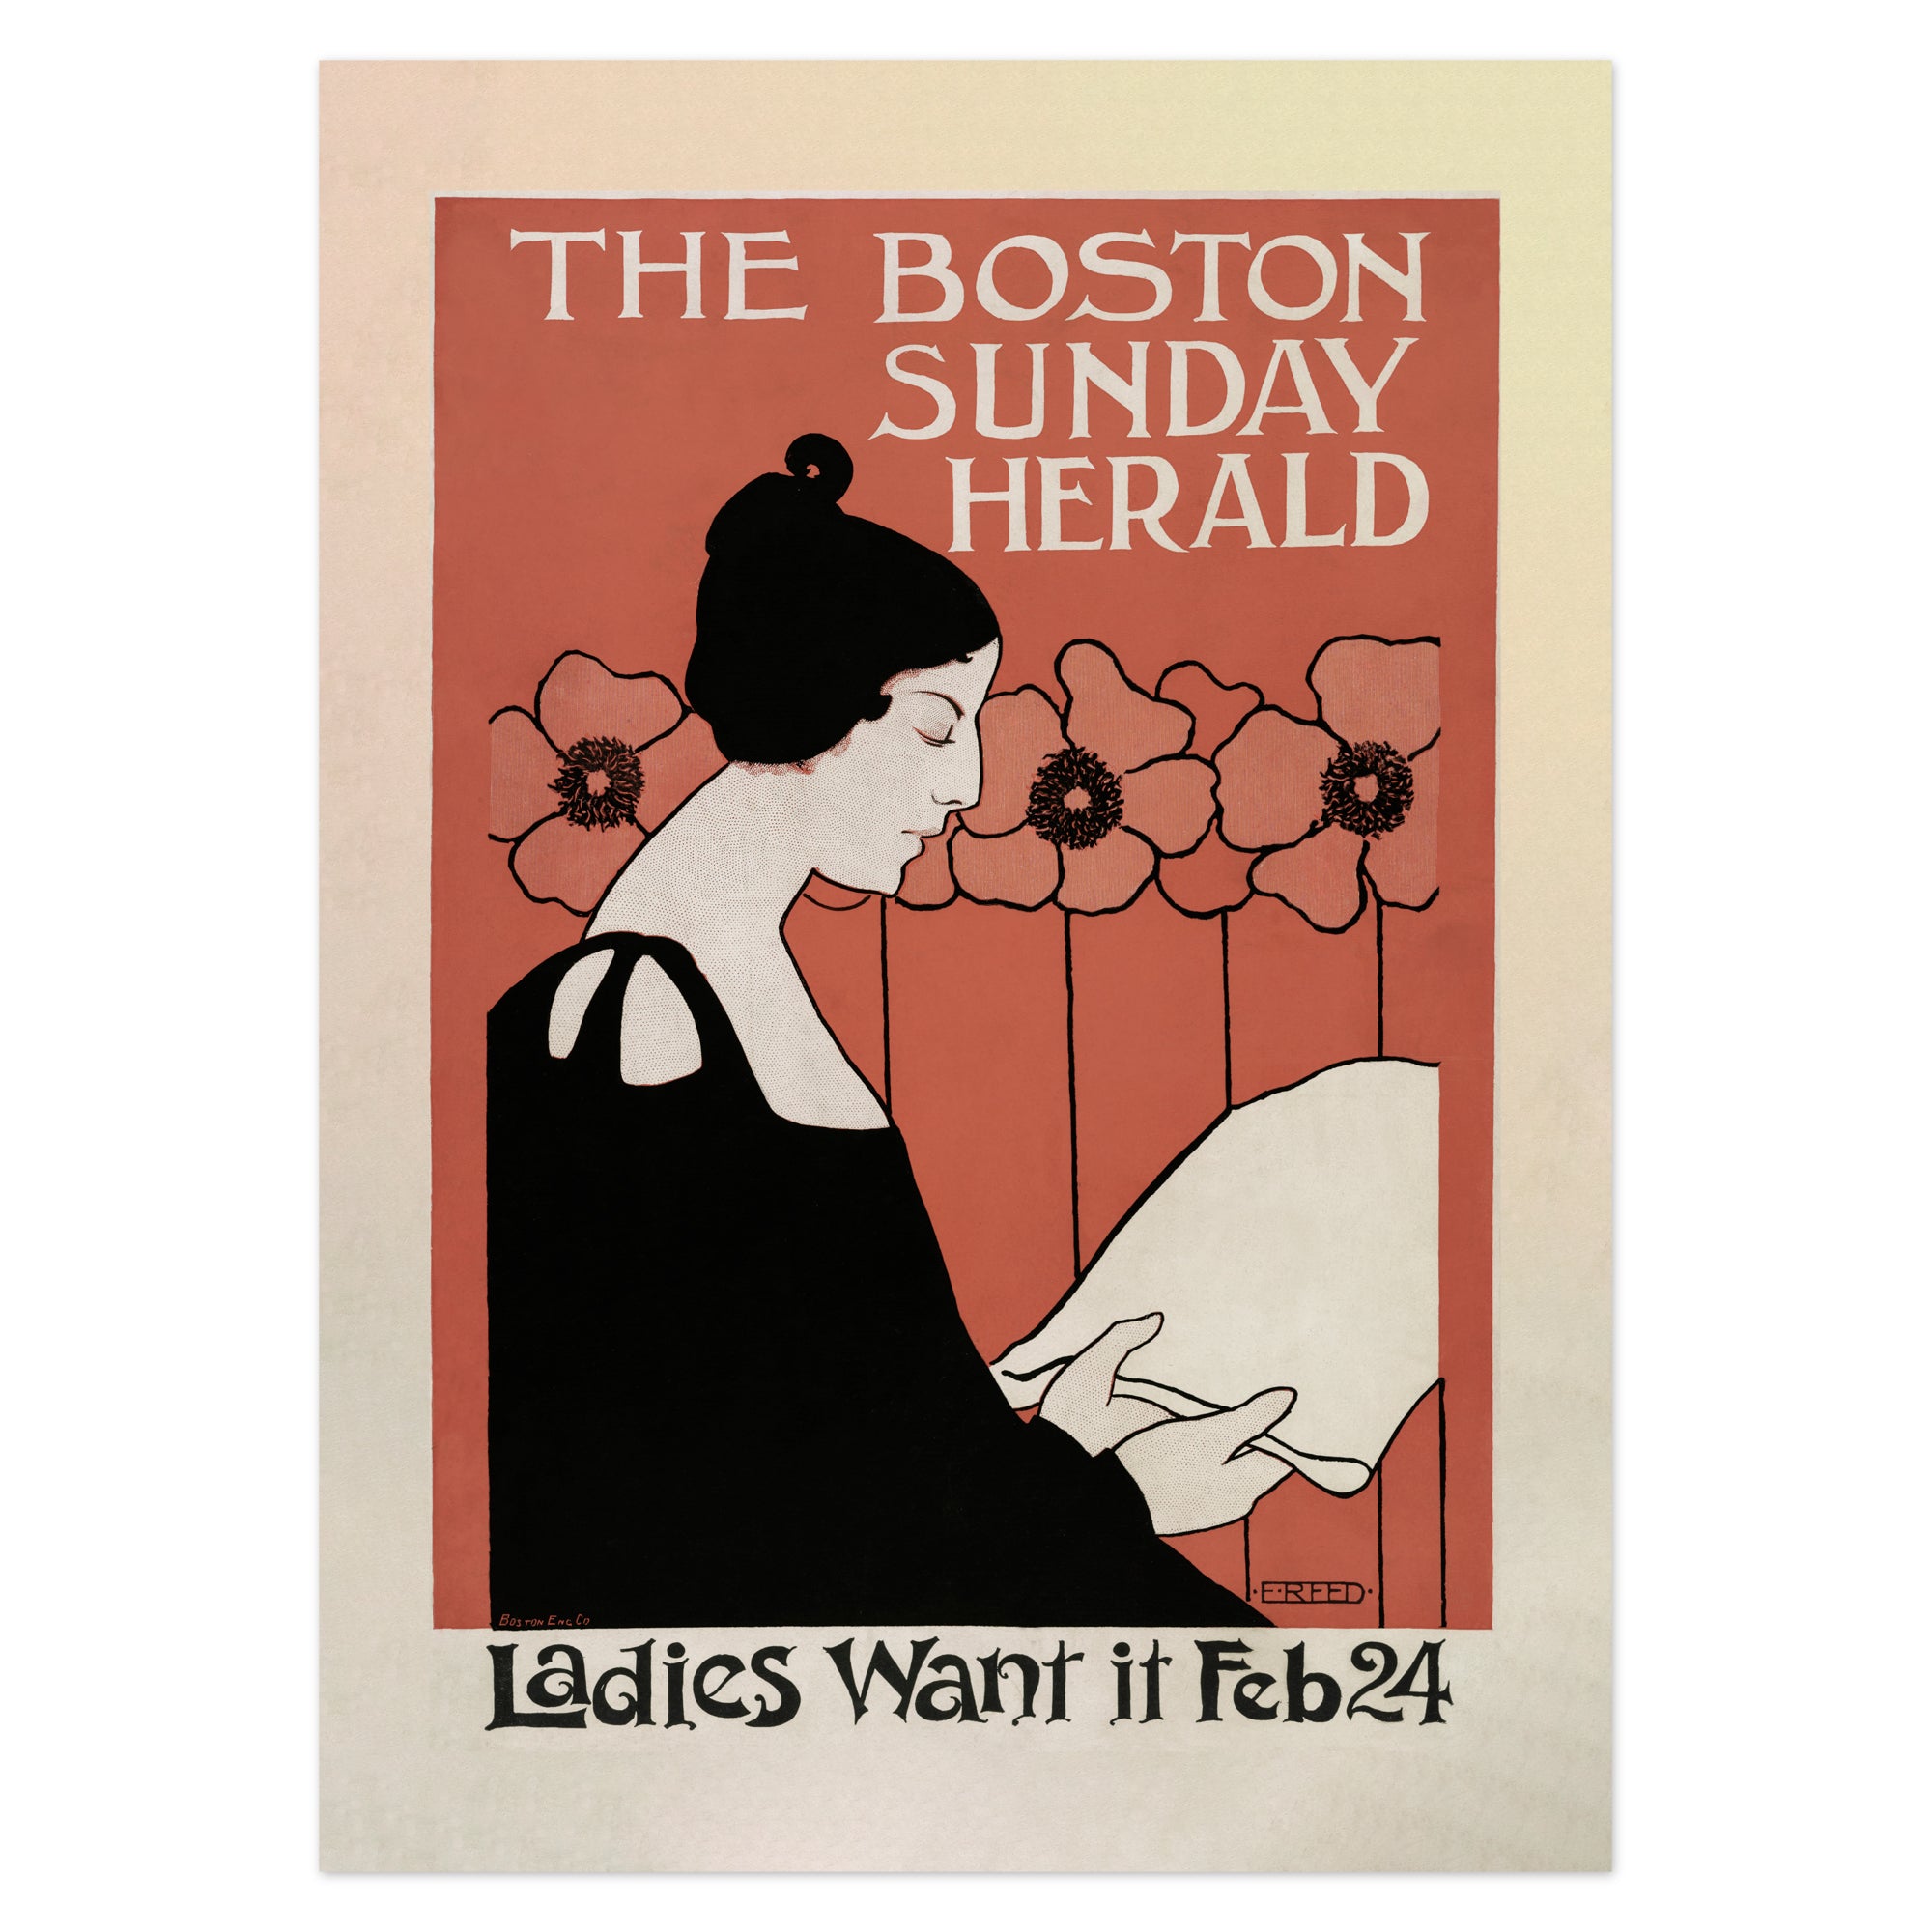 Ethel Reed Poster - The Boston Sunday Herald